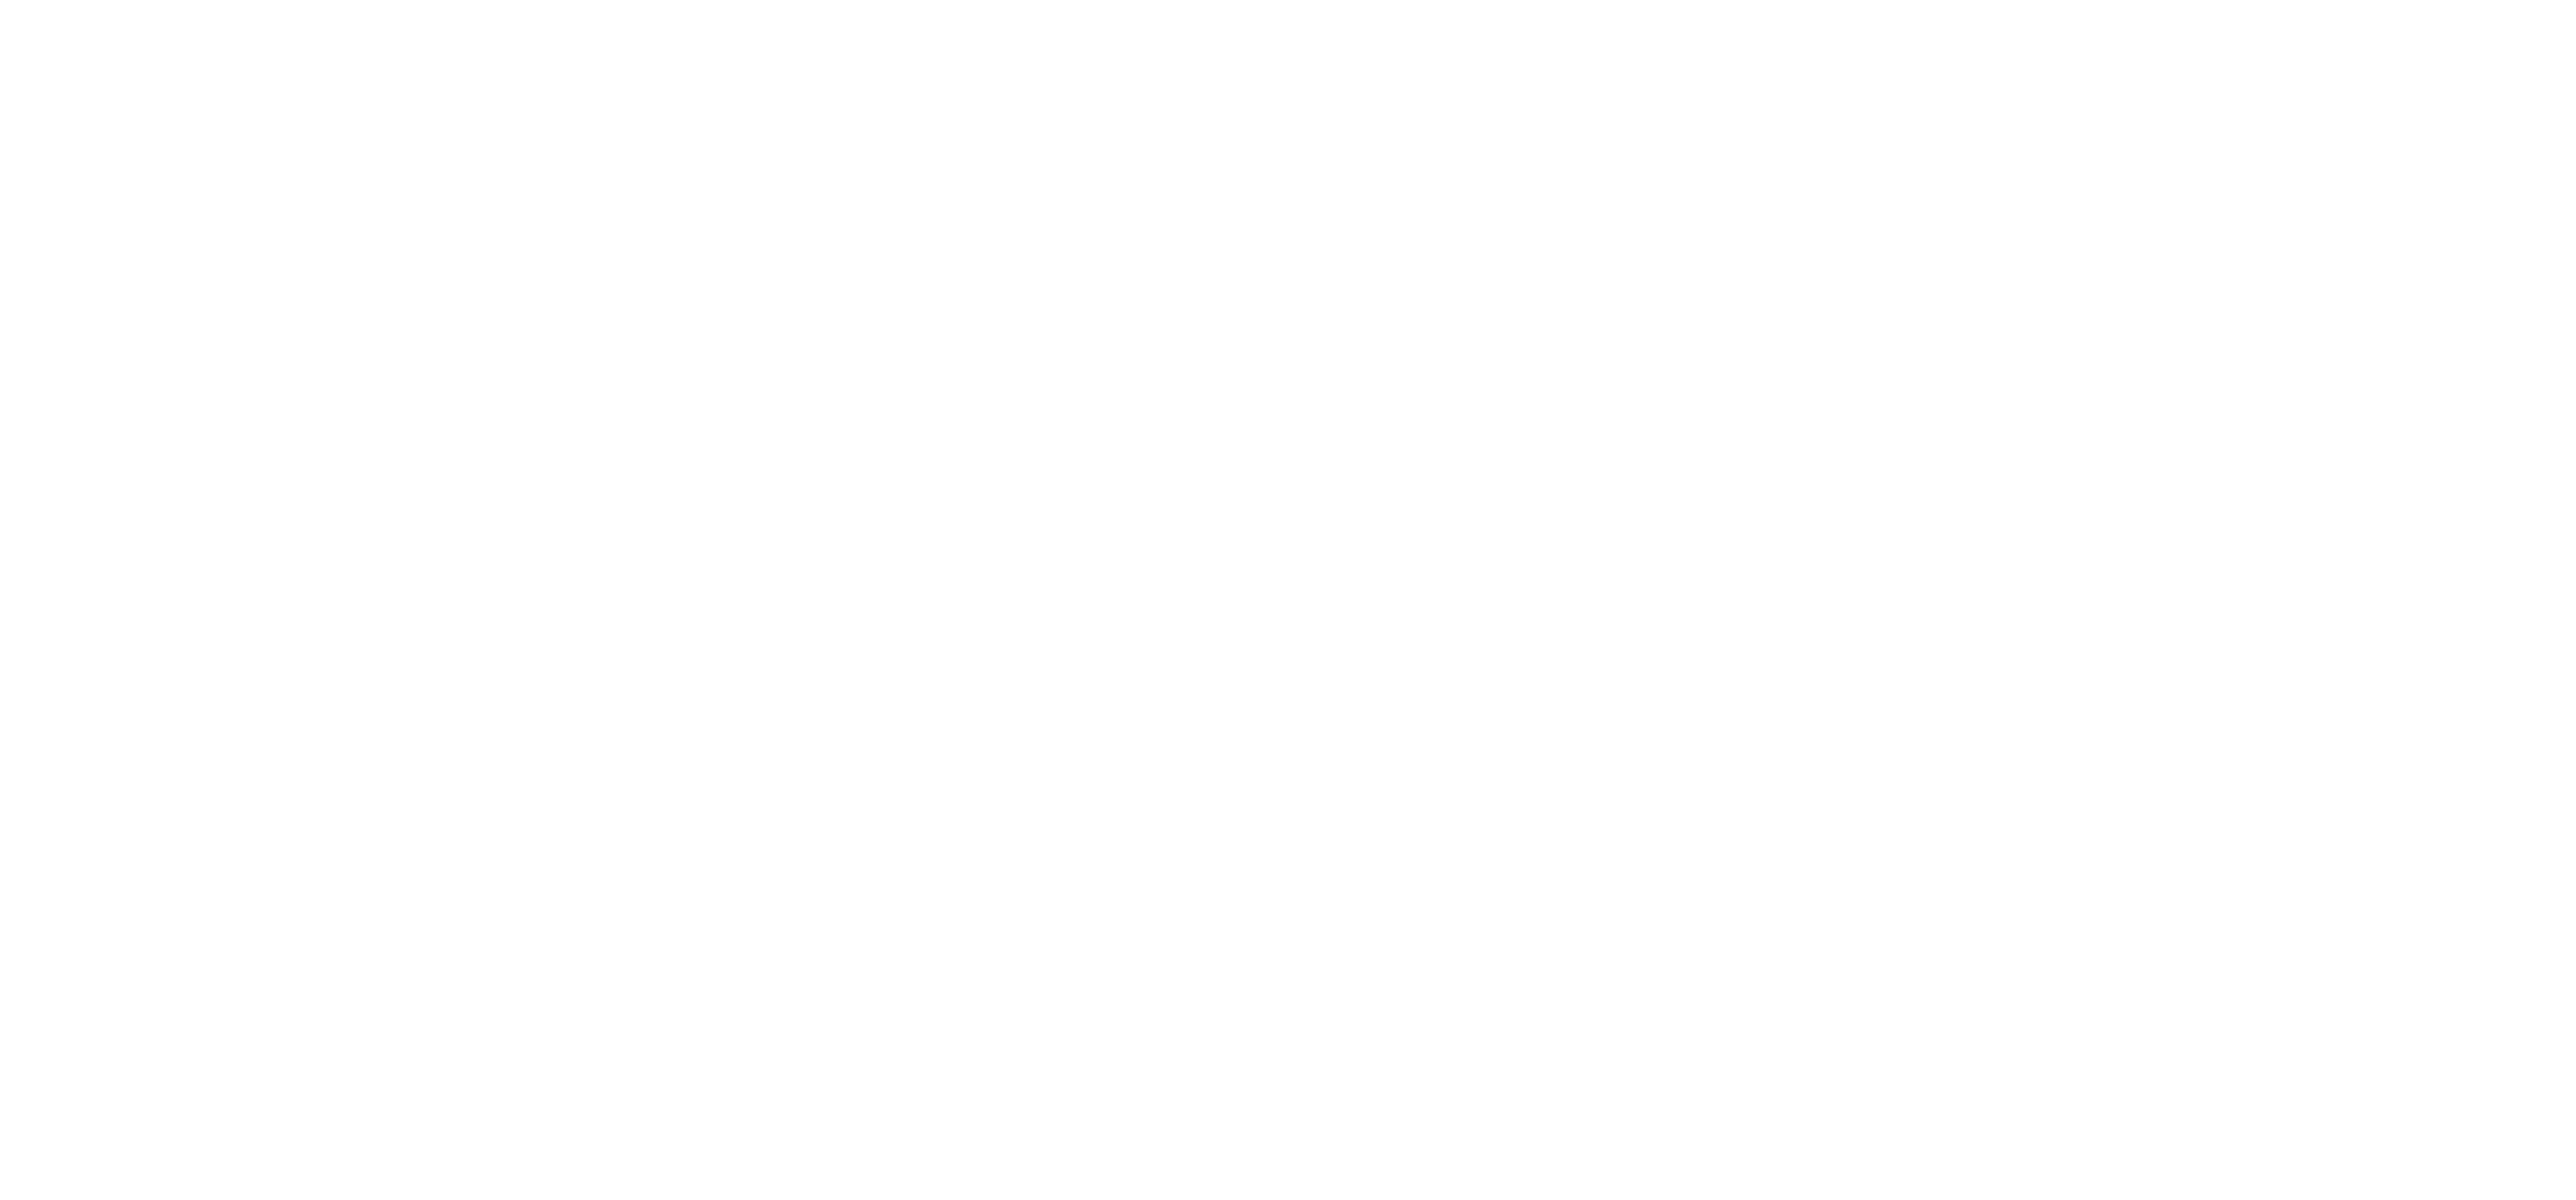 500x logo